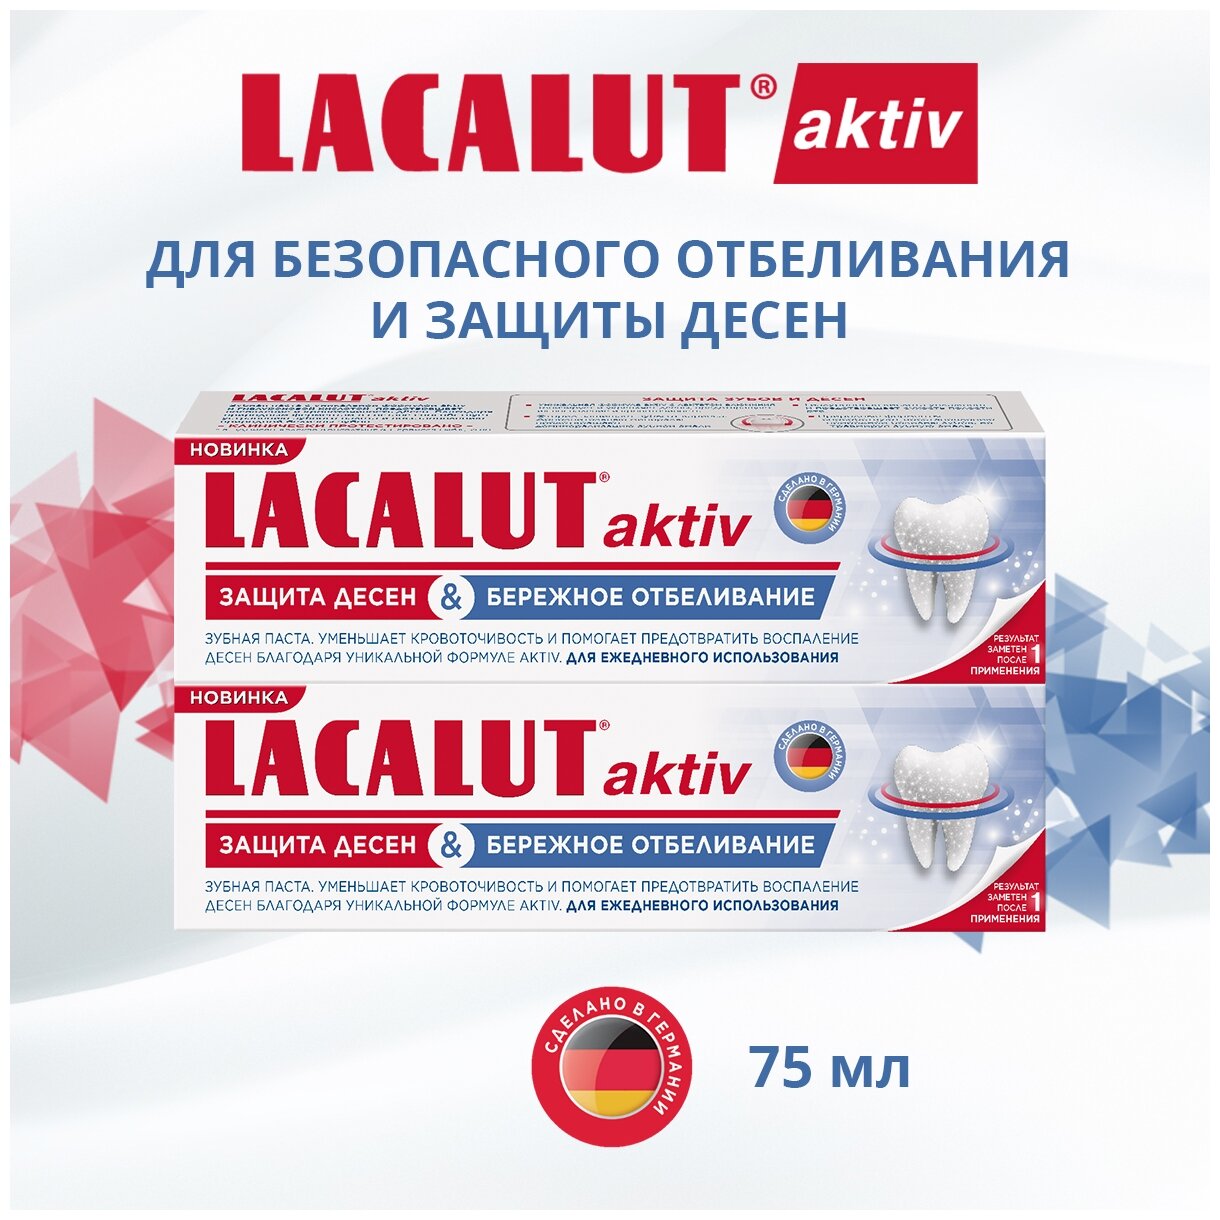 Lacalut® aktiv защита десен и бережное отбеливание зубная паста, 75 мл, спайка №2